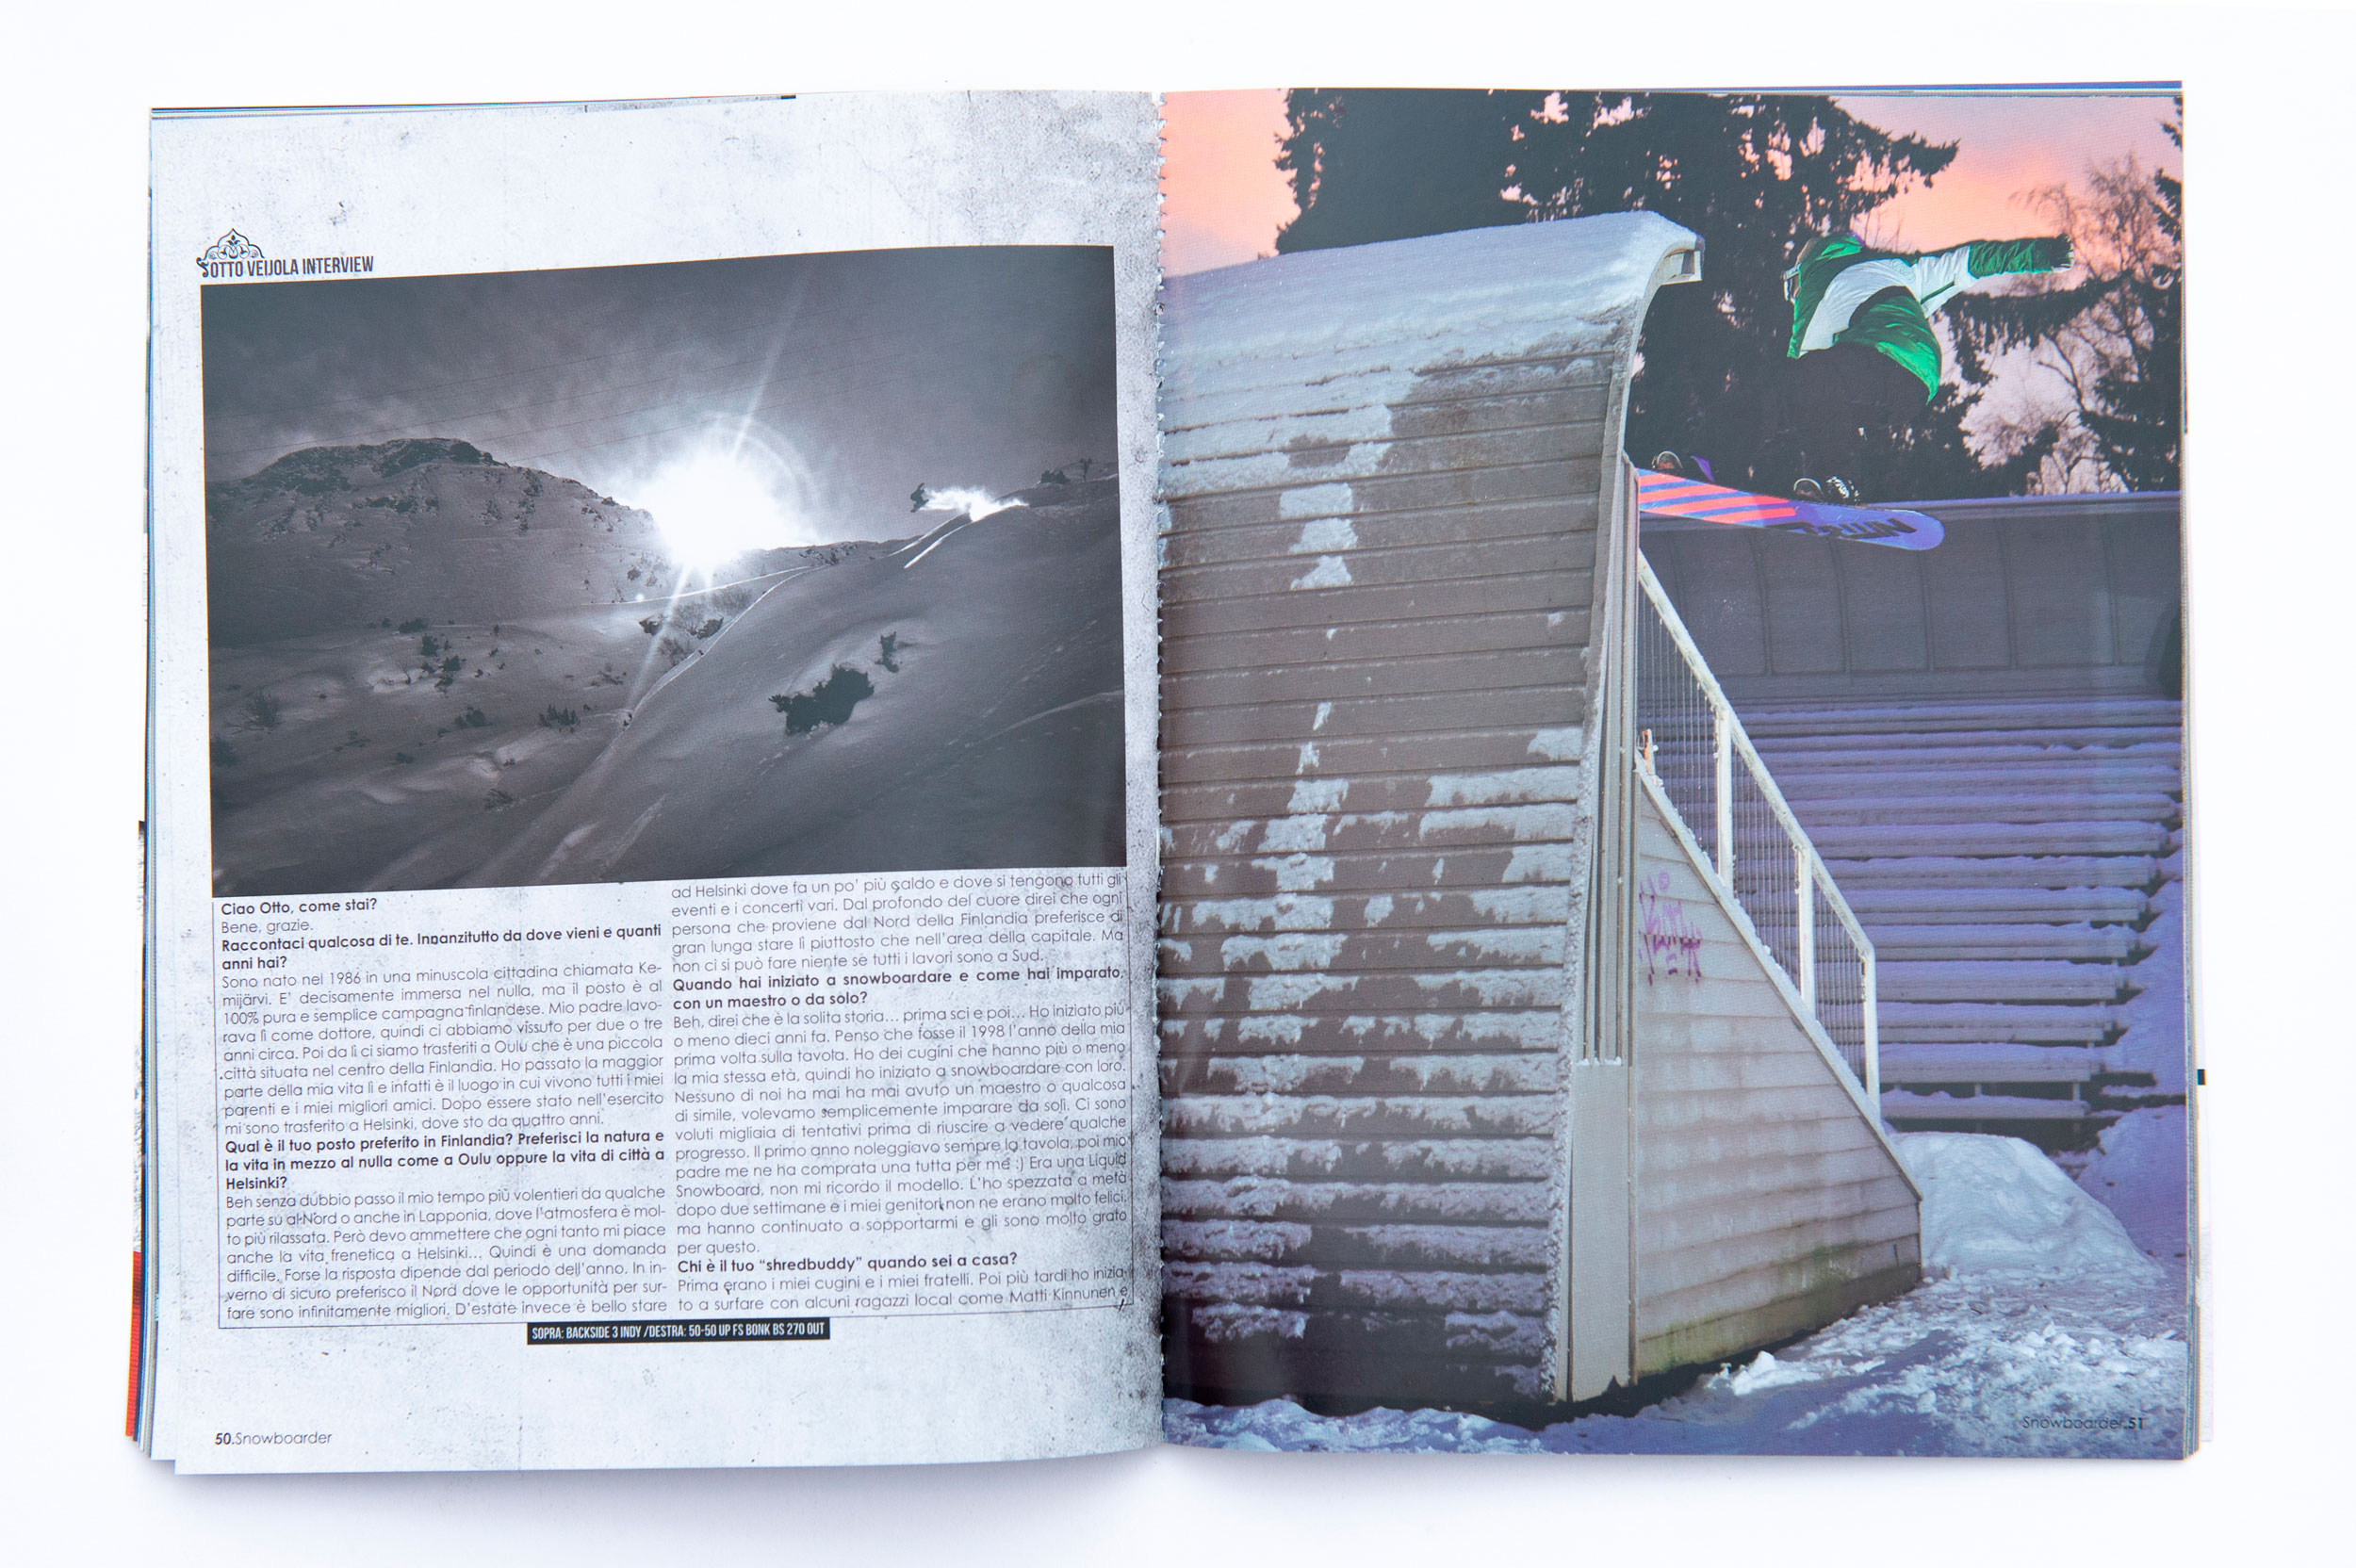 Otto Veijola, Editorial, Snowboardermagazin, Willi Nothers, Referenz 